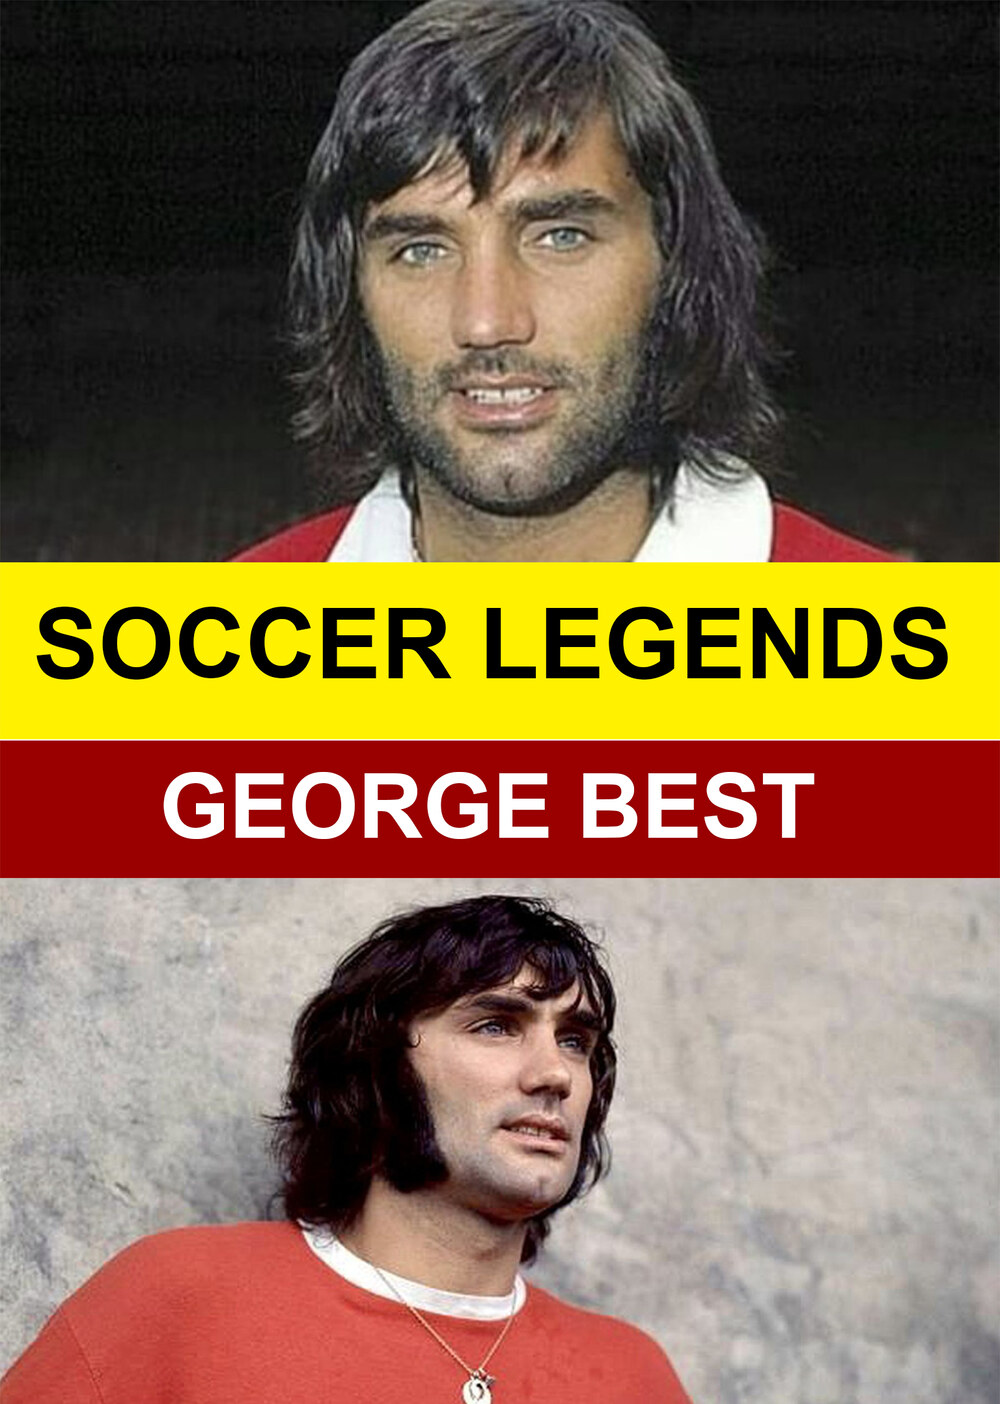 L7976 - Soccer Legends - George Best